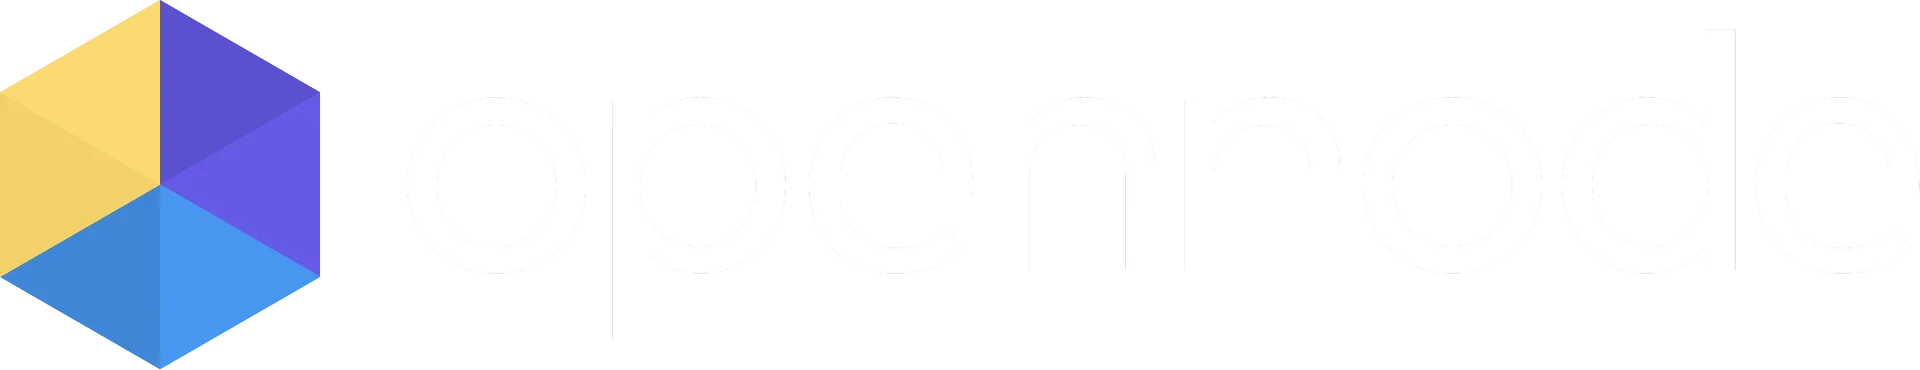 Opennode footer logo